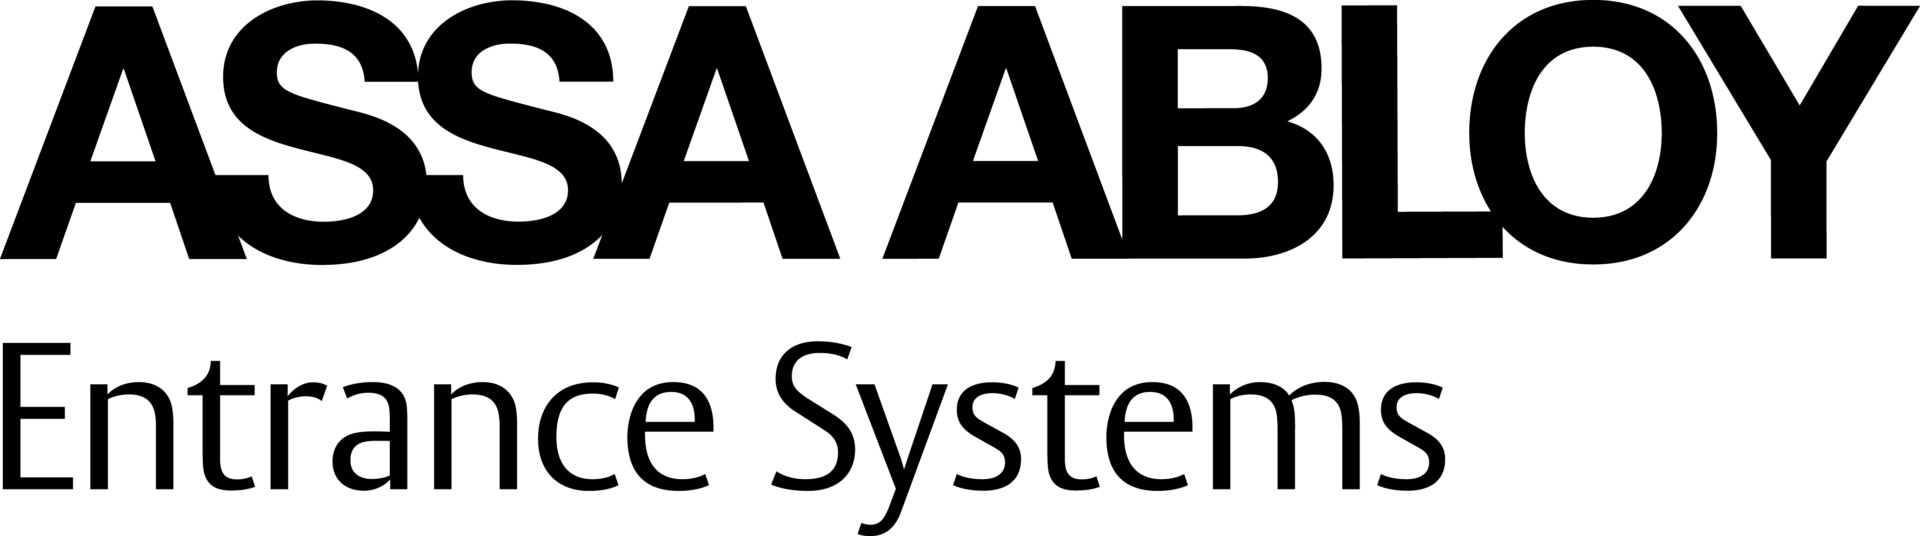 ASSA-ABLOY_Entrance_Systems_Black-1